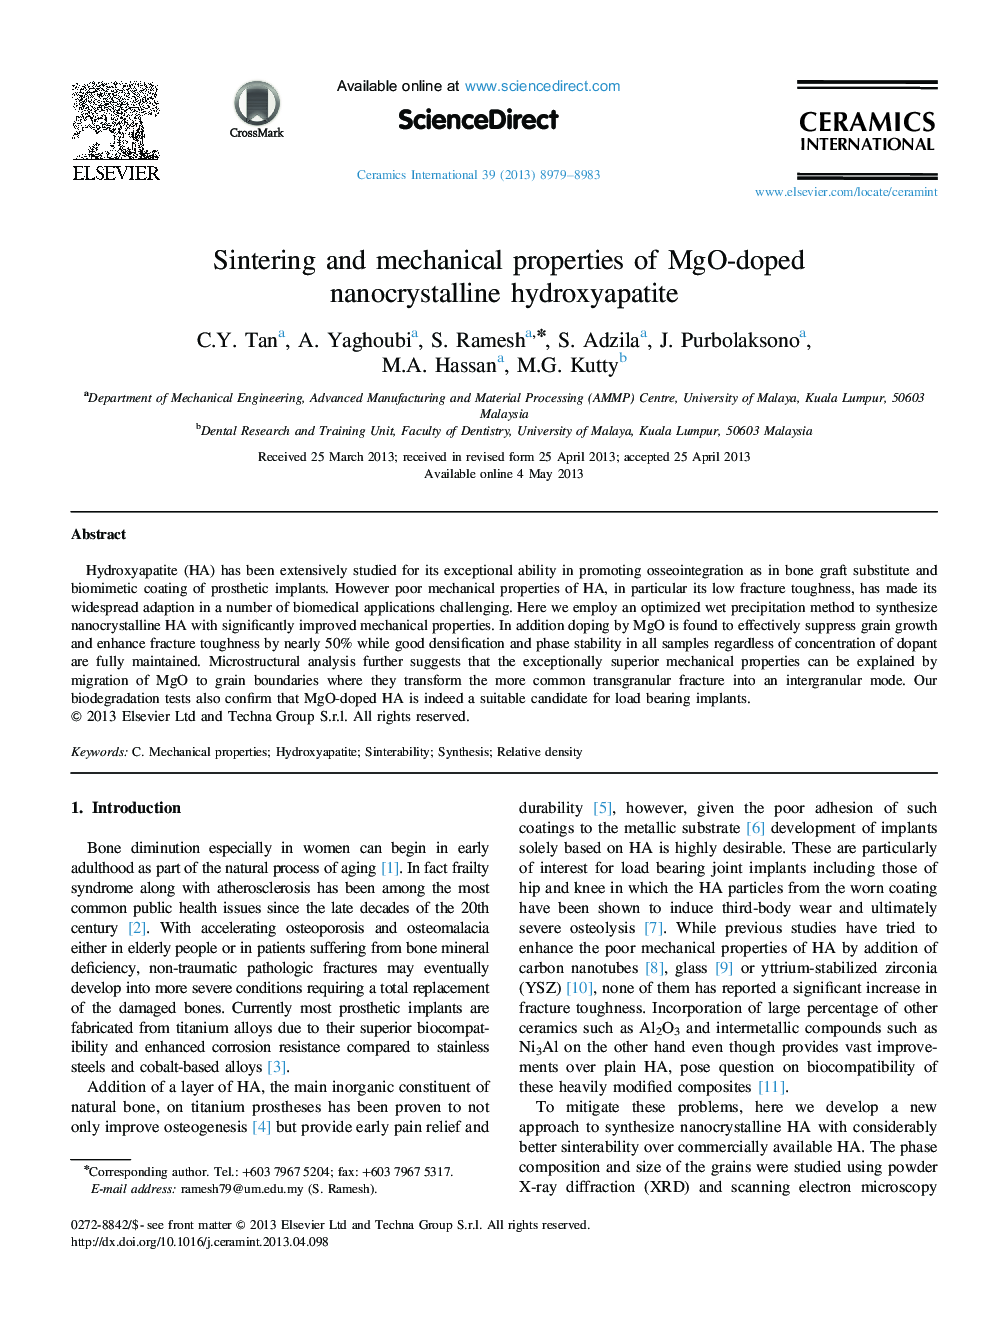 Sintering and mechanical properties of MgO-doped nanocrystalline hydroxyapatite